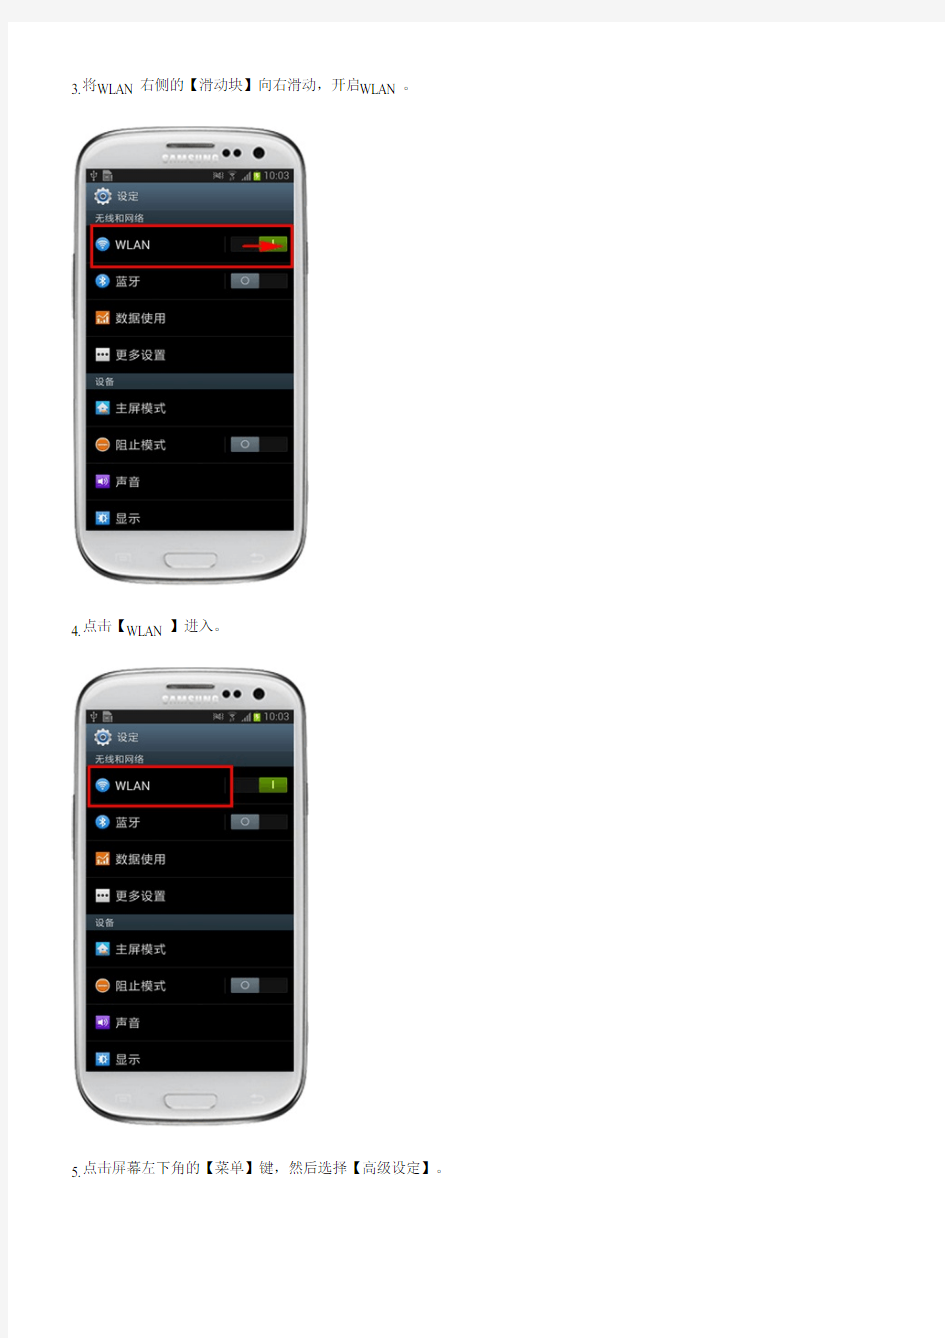 Galaxy S3(安卓4.1.2系统)如何查看WLAN的MAC地址(I9300)